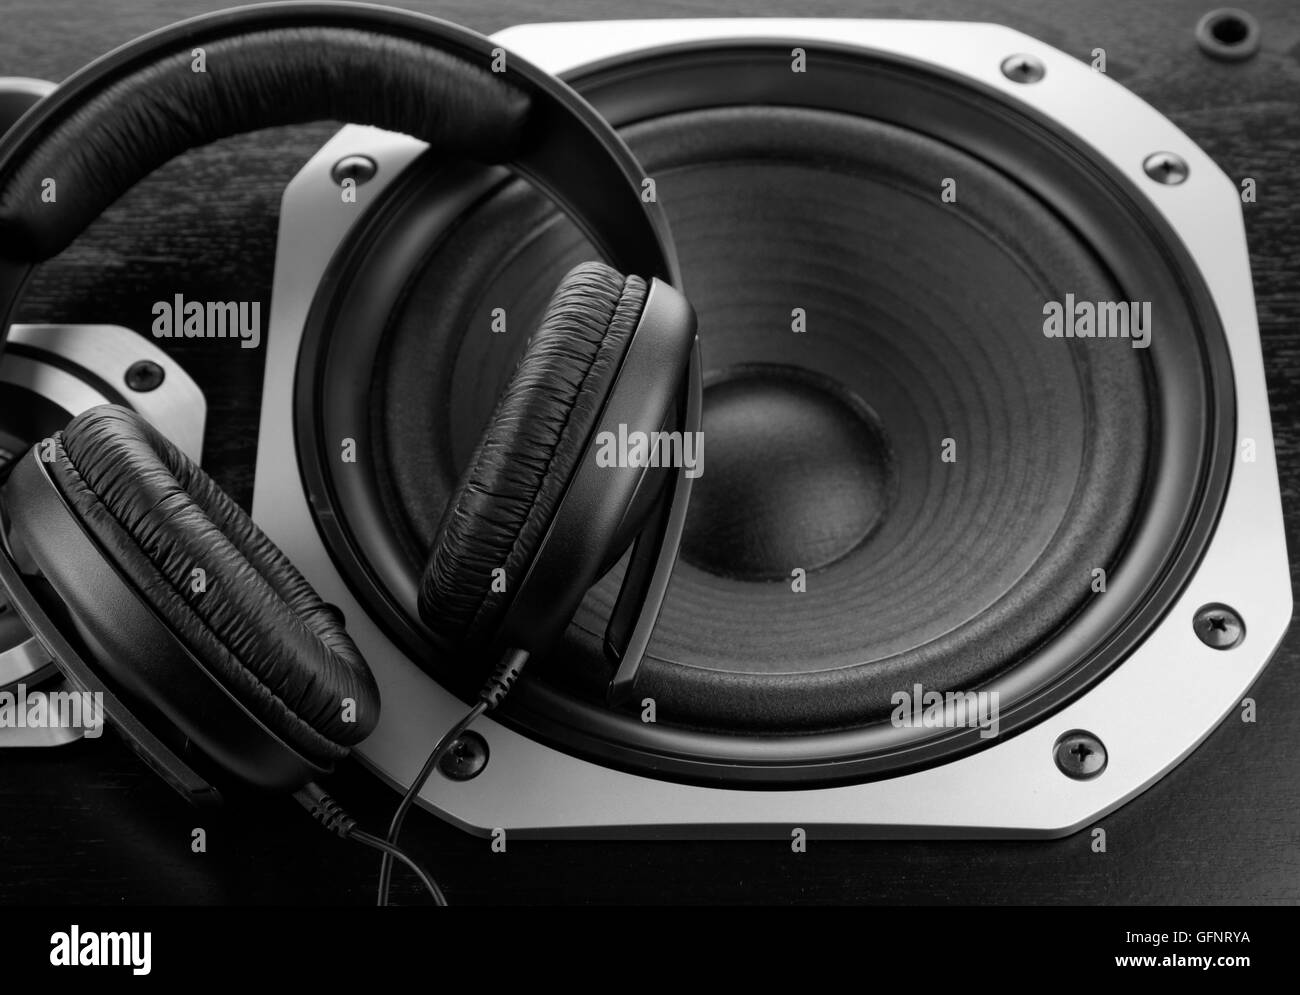 Headphones on stereo speakers Stock Photo